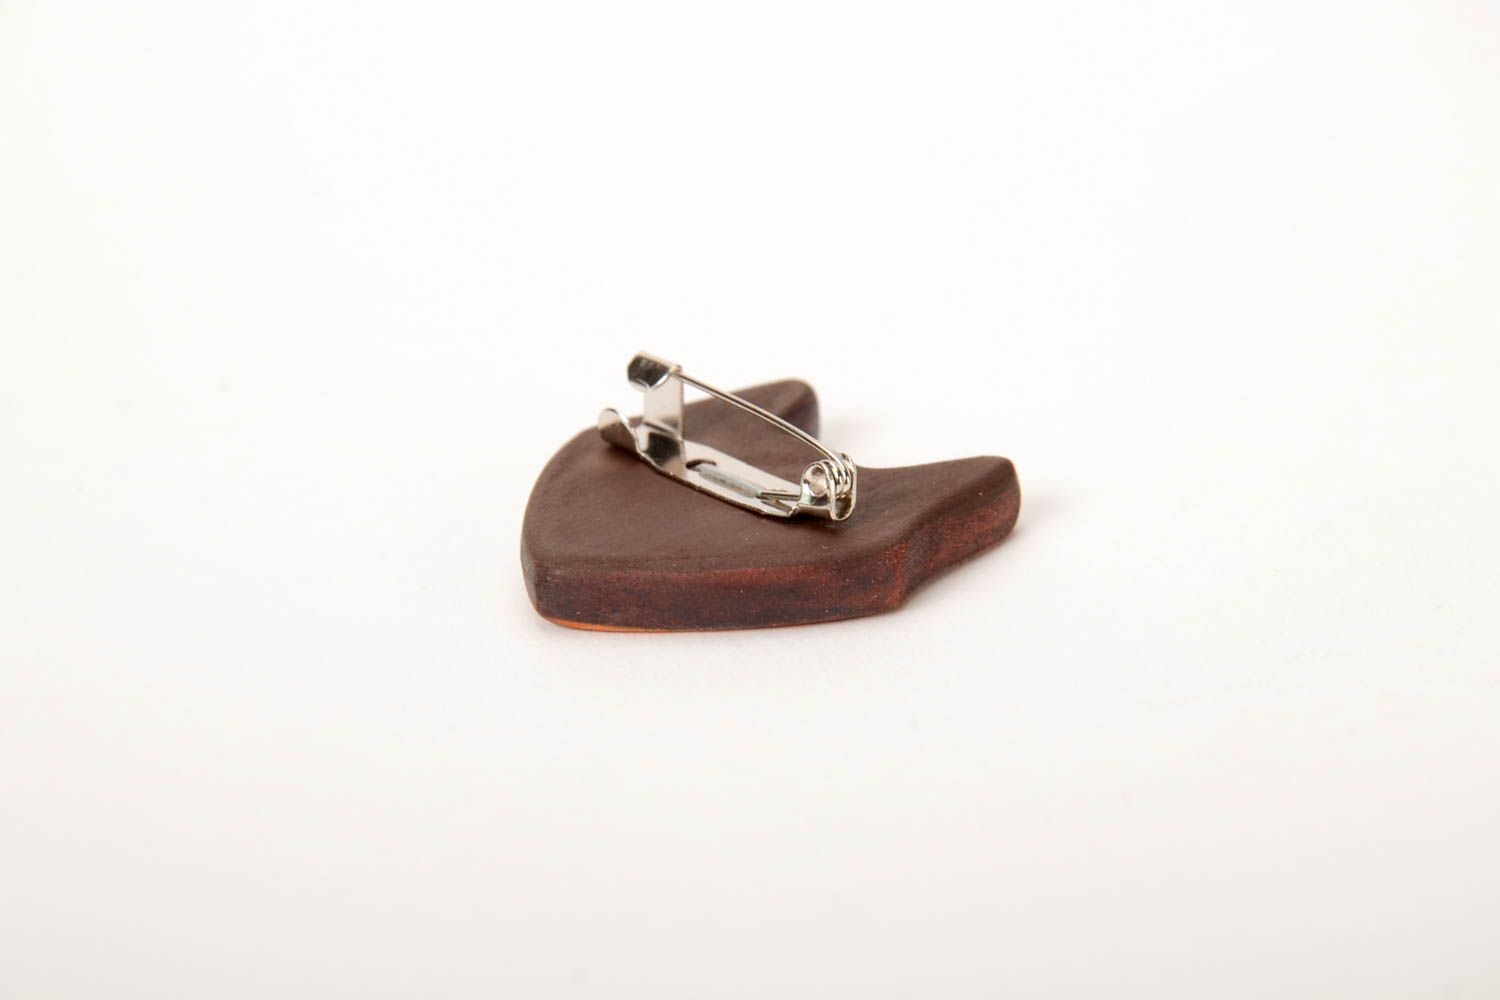 Handmade brooch designer jewelry unusual accessory wooden brooch gift ideas photo 5